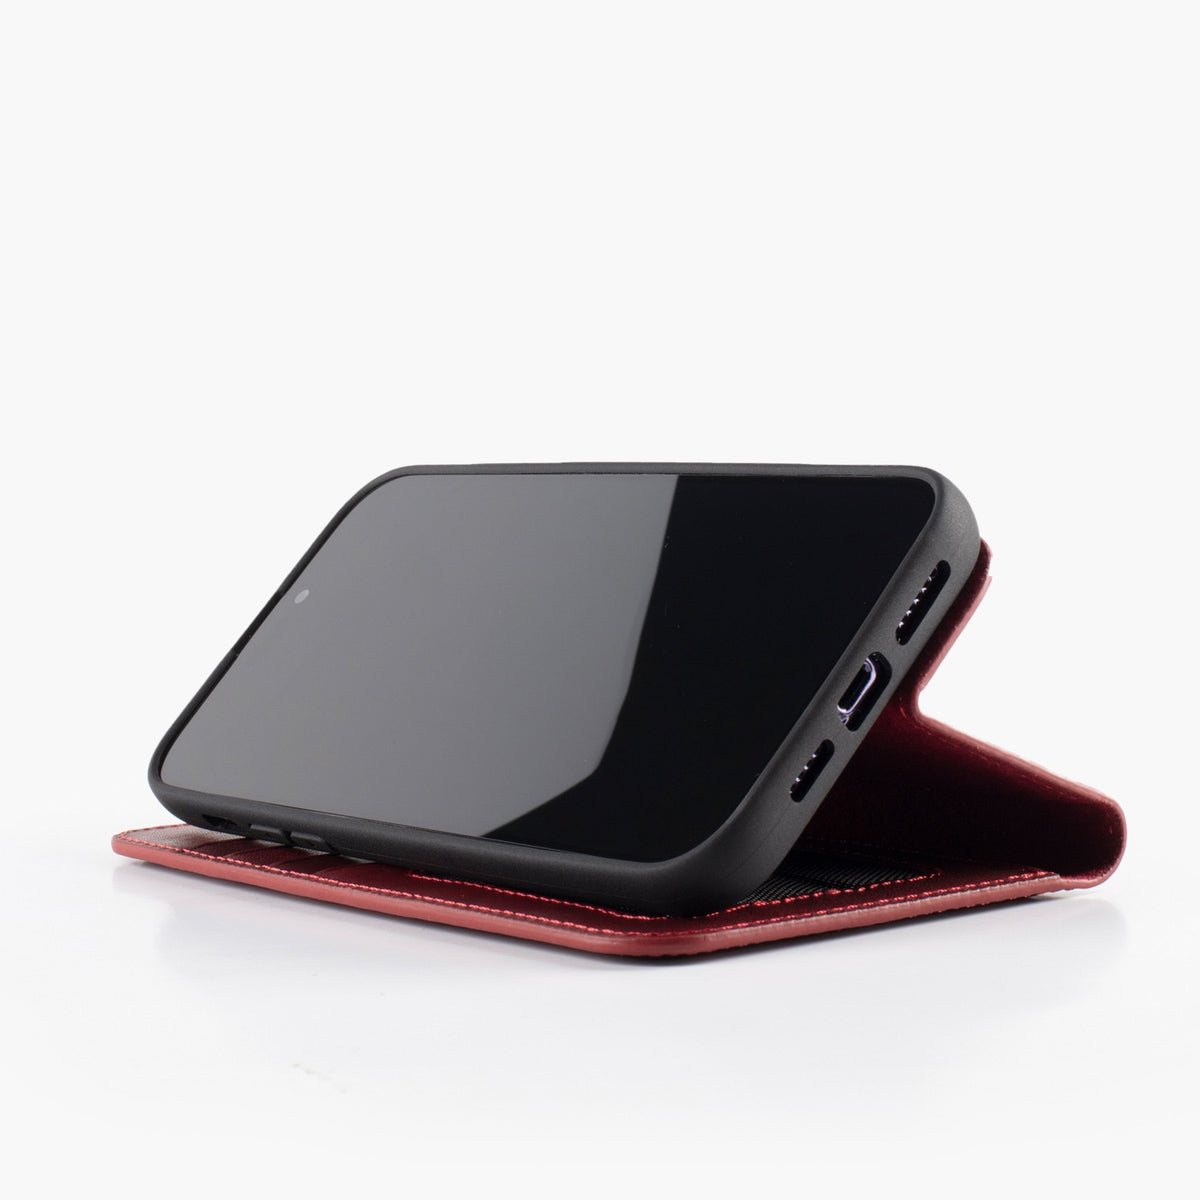 Wachikopa Genuine Leather Magic Book Case 2 in 1 for Samsung S23 Plus Red